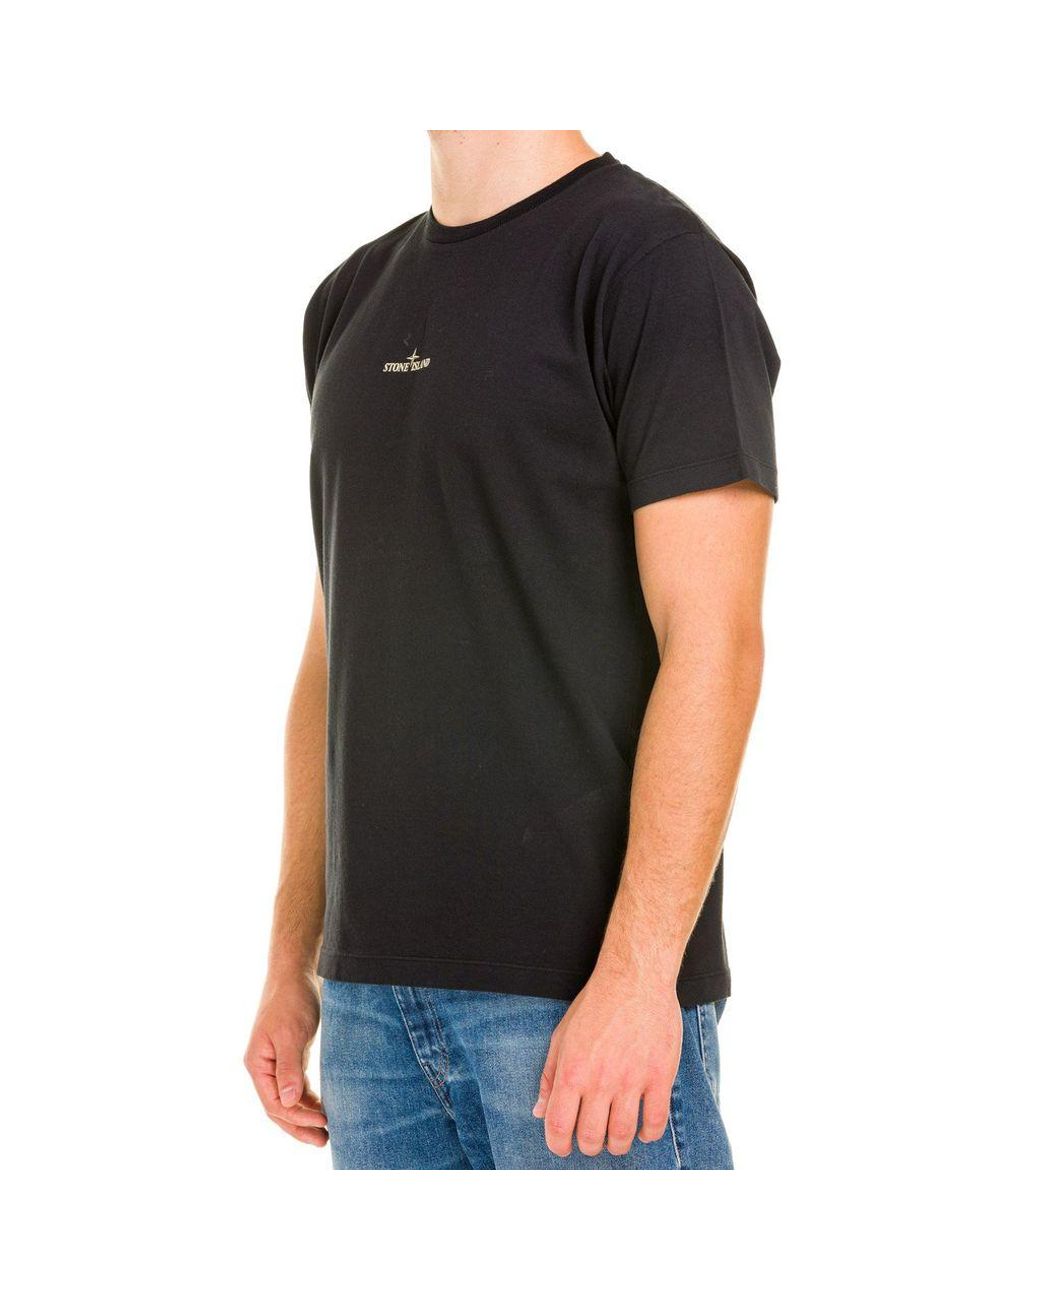 Stone Island T-shirt V0029 75152ns83 in Black for Men - Lyst